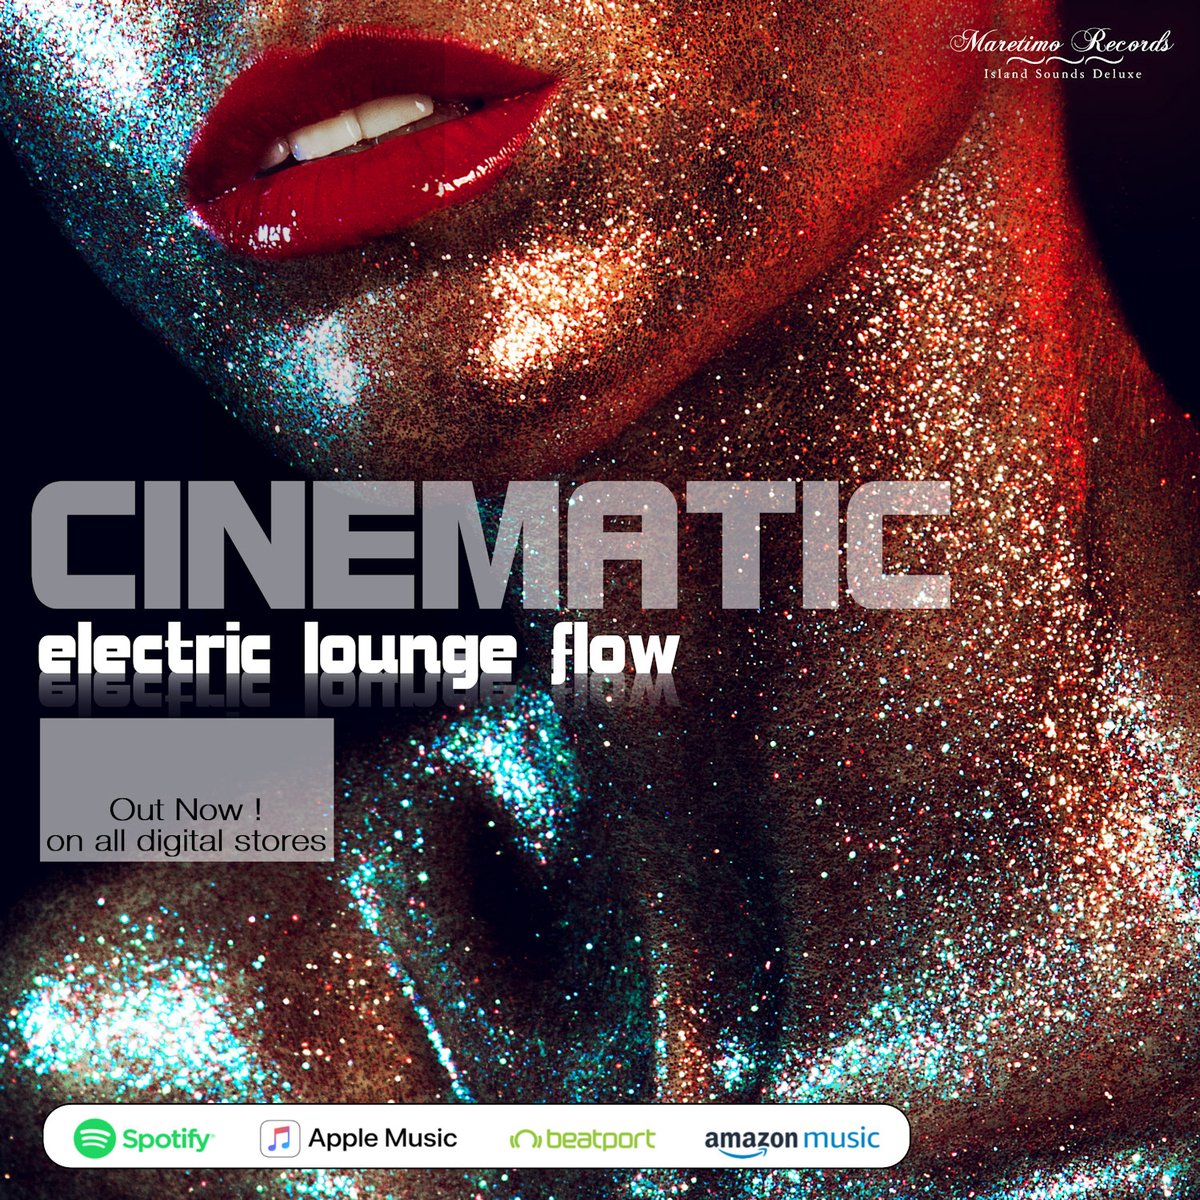 Out Now ! 😍 Cinematic - electronic lounge flow Anhören Spotify 🎧 open.spotify.com/album/5FbeIcEb… Anhören Apple Music 🎧 music.apple.com/us/album/elect… ✅ Kostenloser Download -▷ bit.ly/fb-Maretimo-Ra… (Android+IOS) . #loungemusic #chilloutmusic #maretimoradio #djmaretimo #maretimorecords